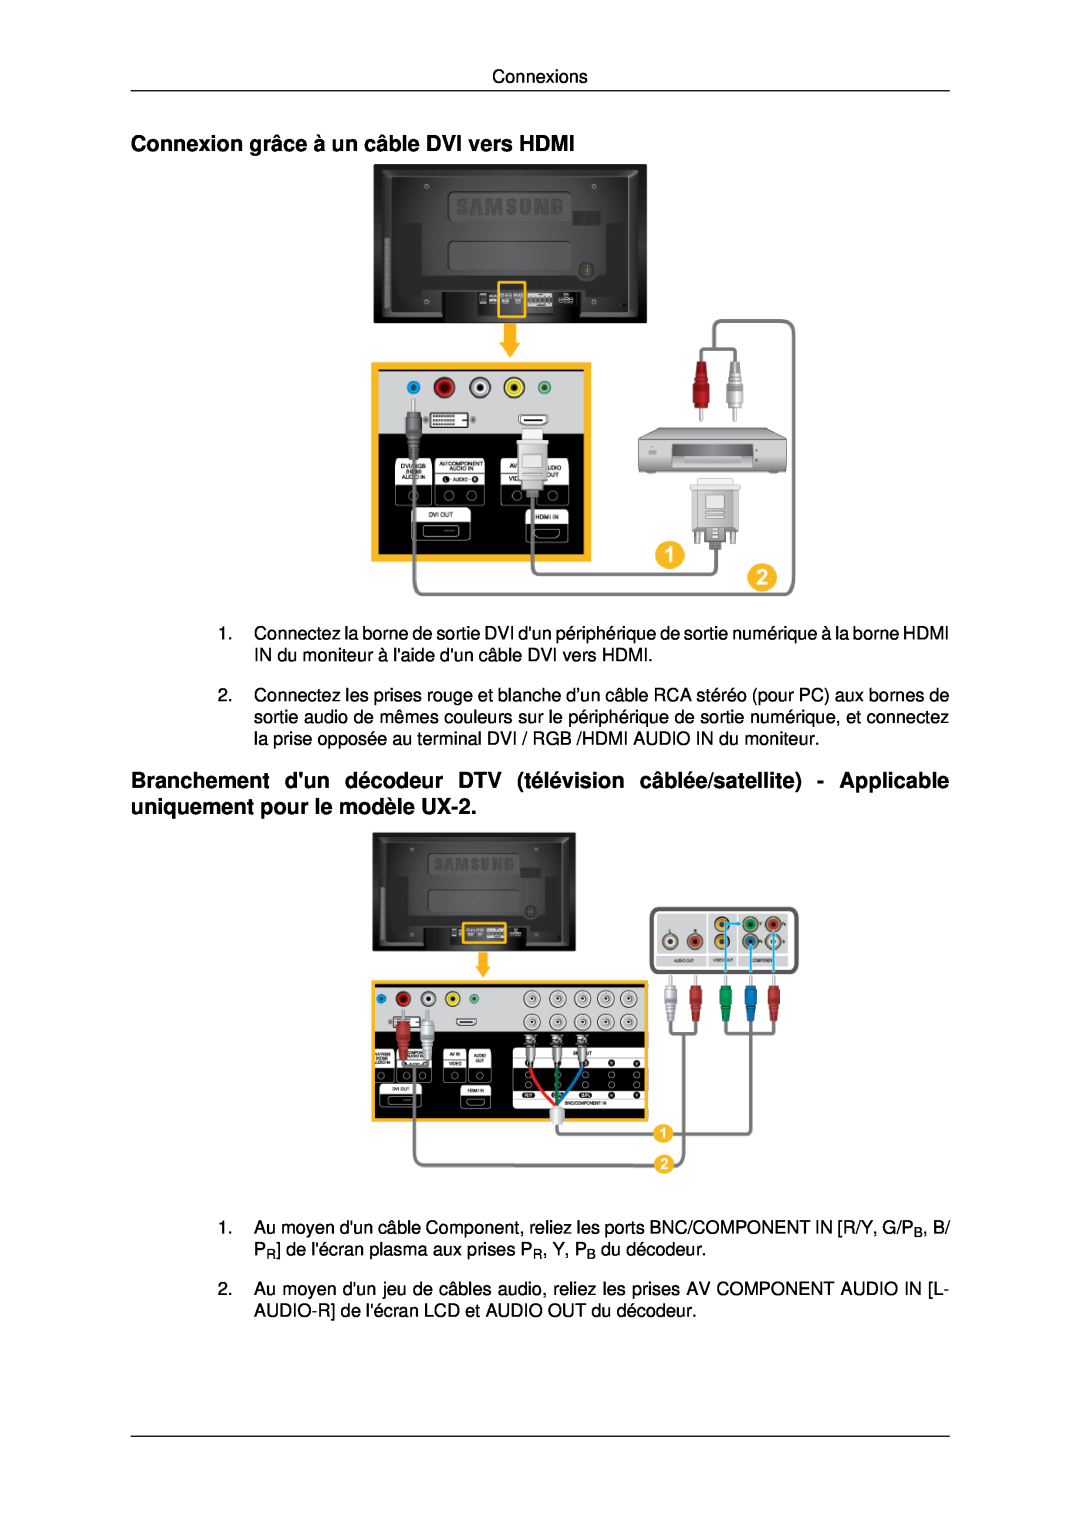 Samsung LH46MRTLBC/EN, LH46MRPLBF/EN, LH40MRTLBC/EN, LH40MRPLBF/EN, LH46MSTLBB/EN Connexion grâce à un câble DVI vers HDMI 